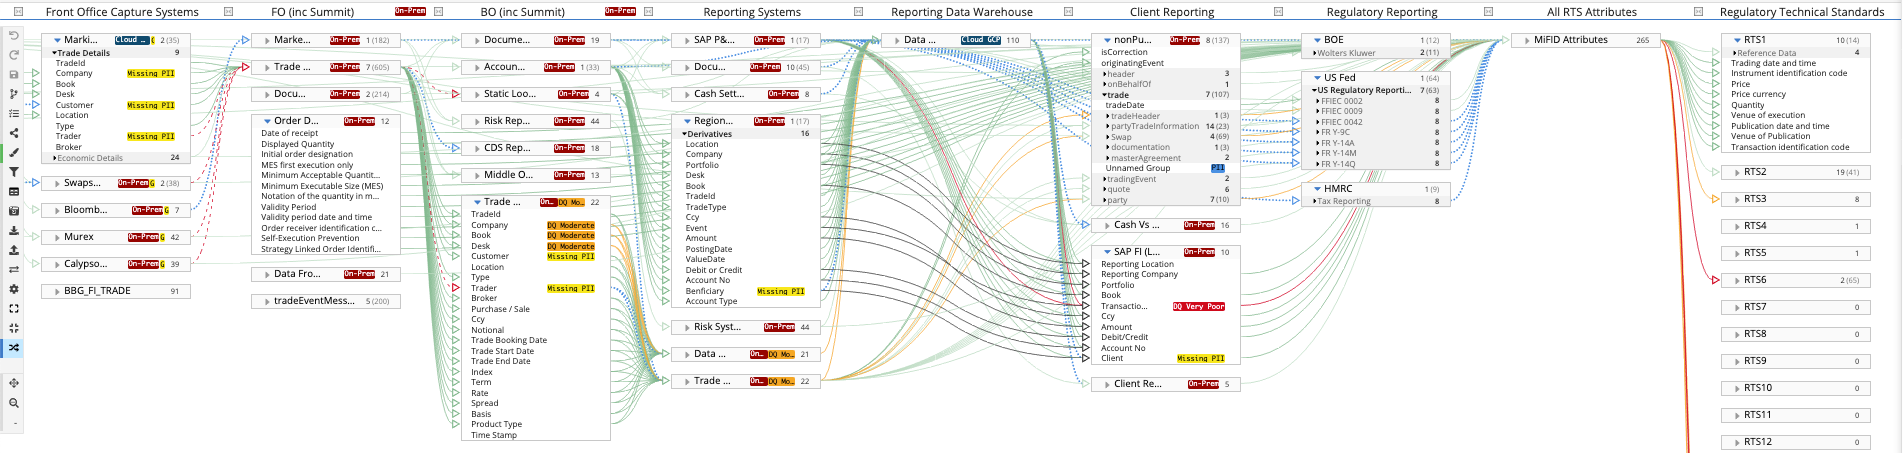 Data lineage visualization